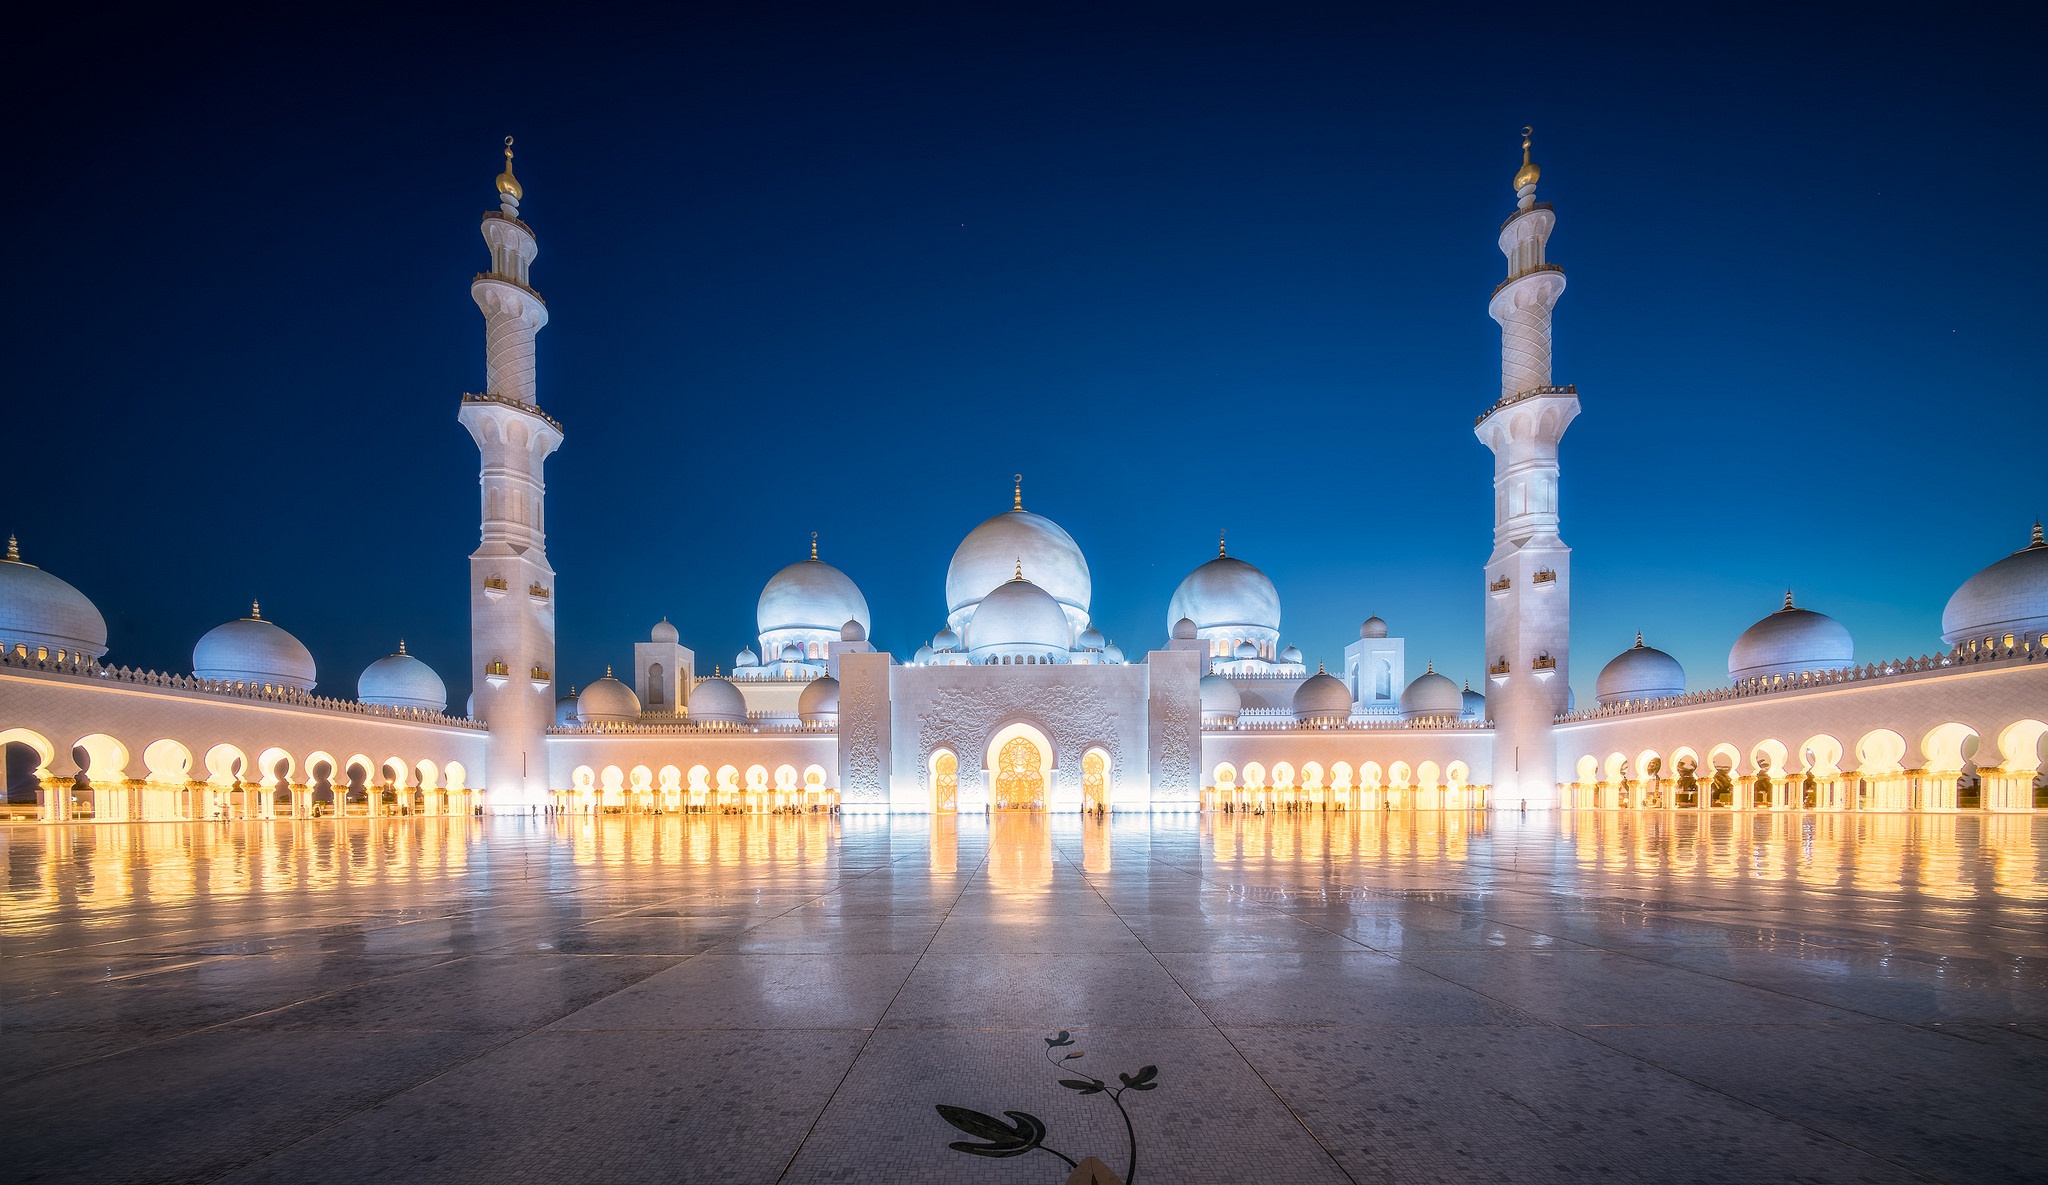 Abu Dhabi Architecture Building Mosque Night Sheikh Zayed Grand Mosque United Arab Emirates 2048x1185